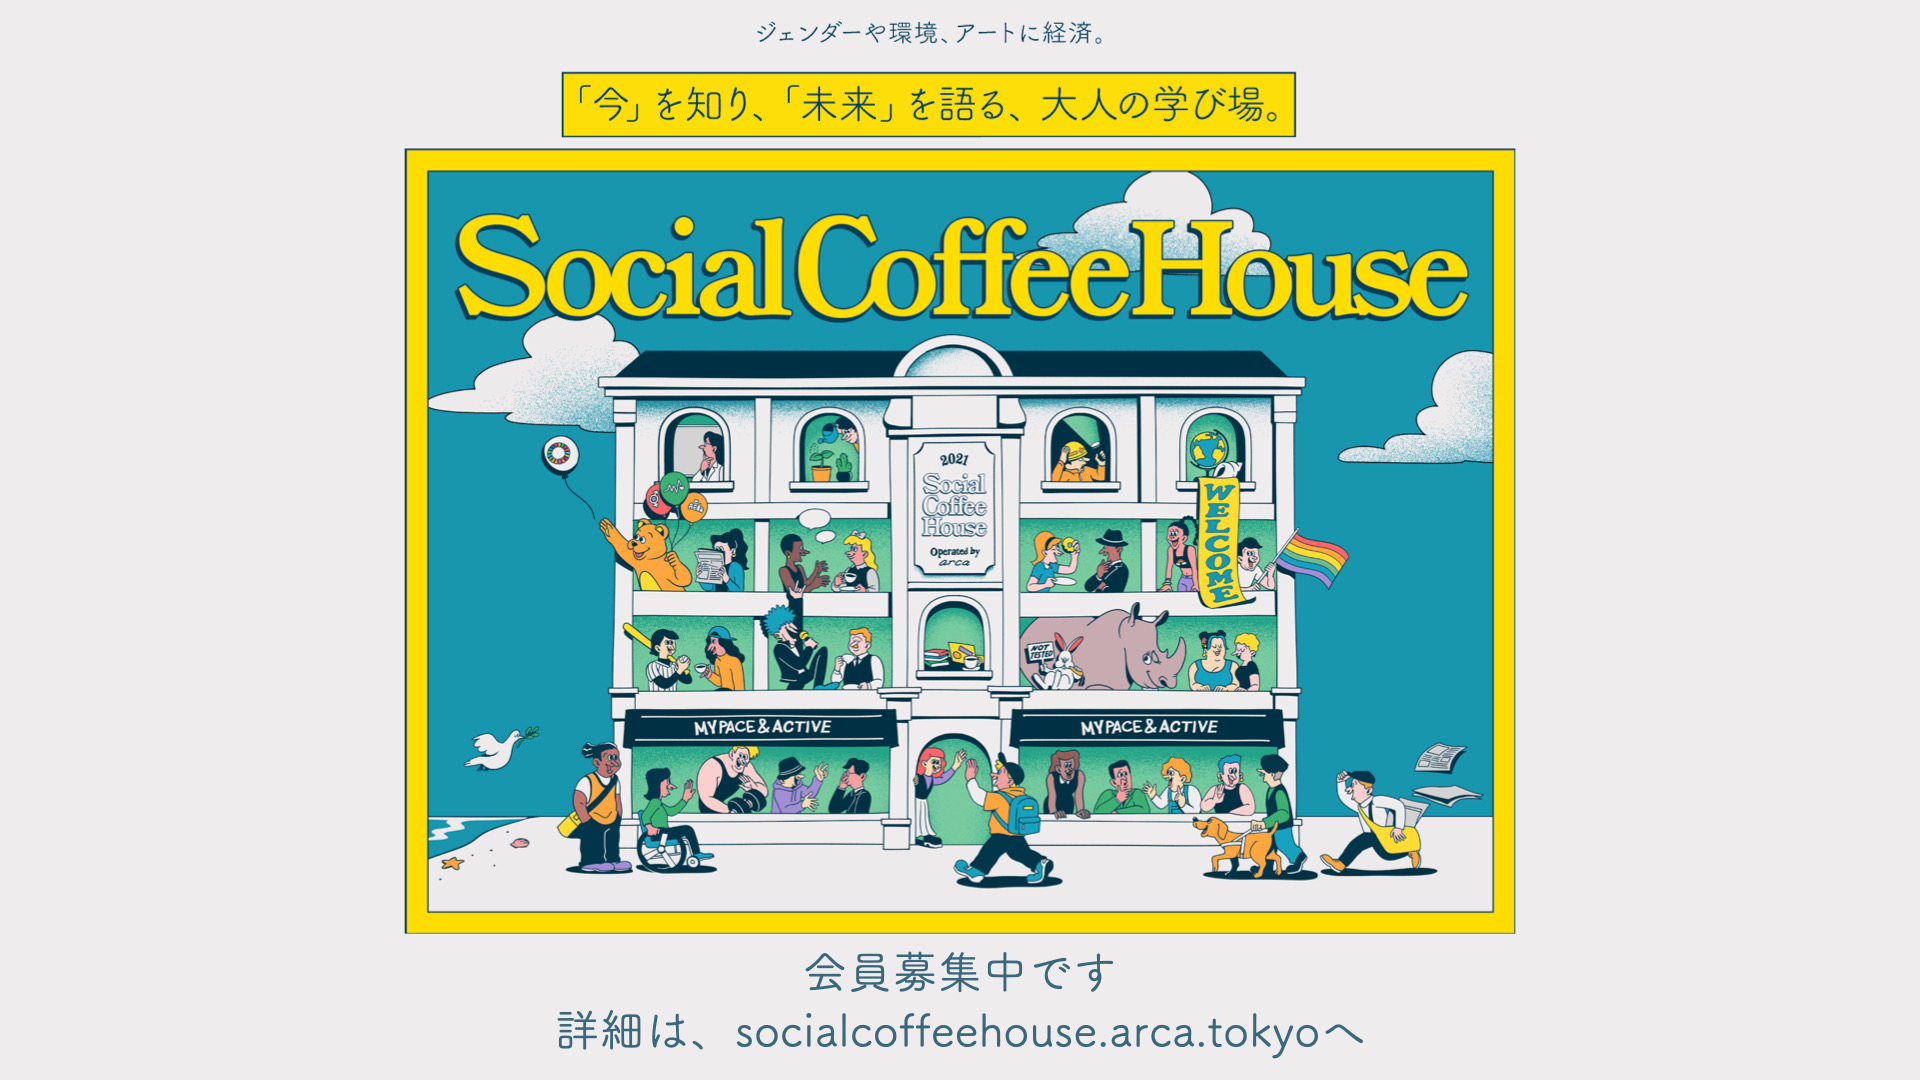 SocialCoffeeHouse"